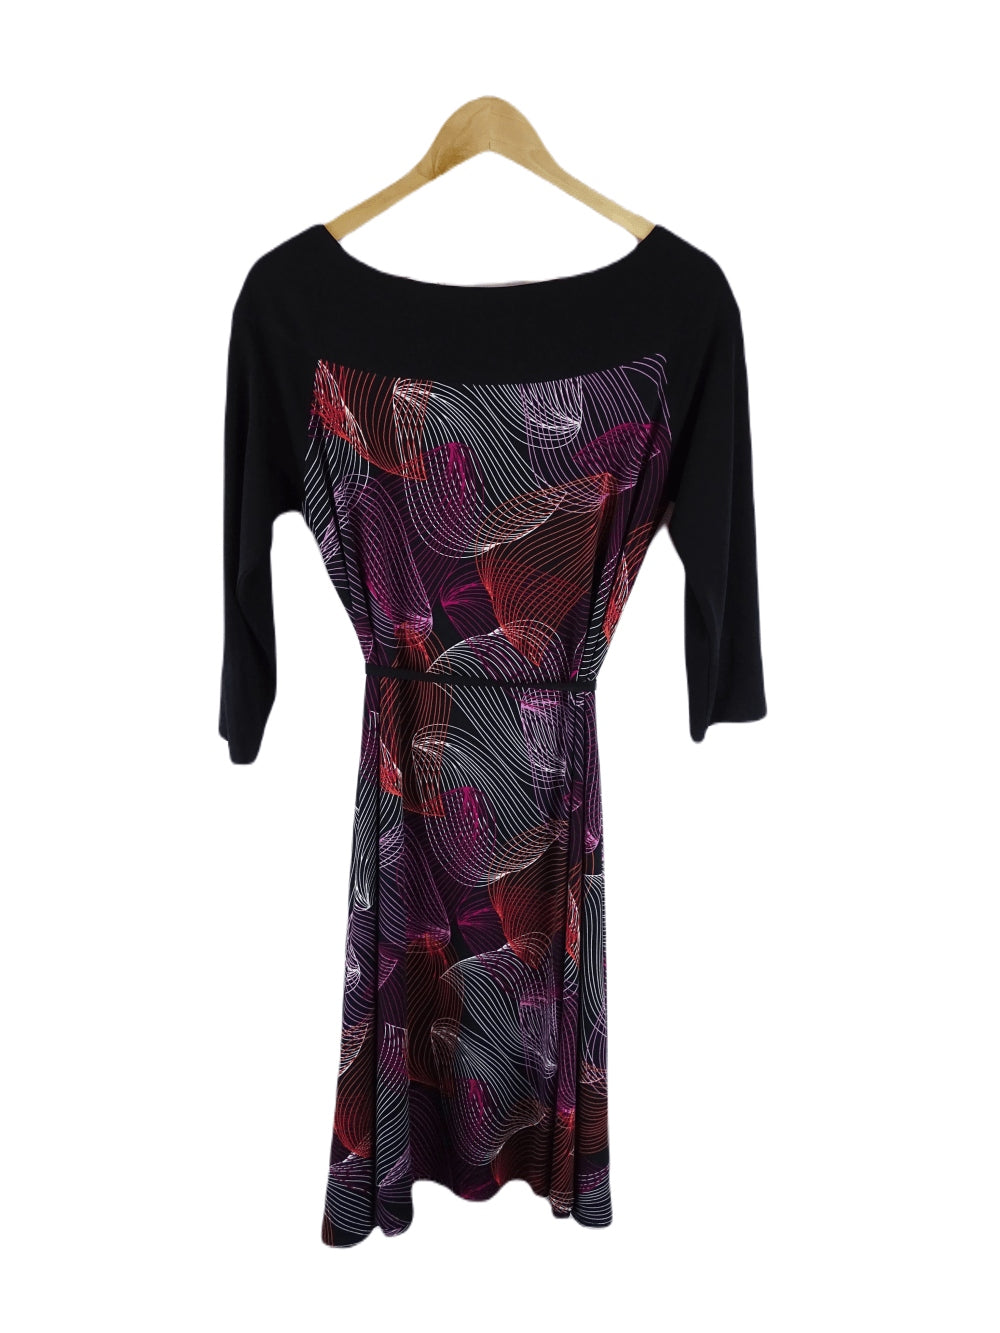 Sacha Drake Black and Purple Patterned Dress 16